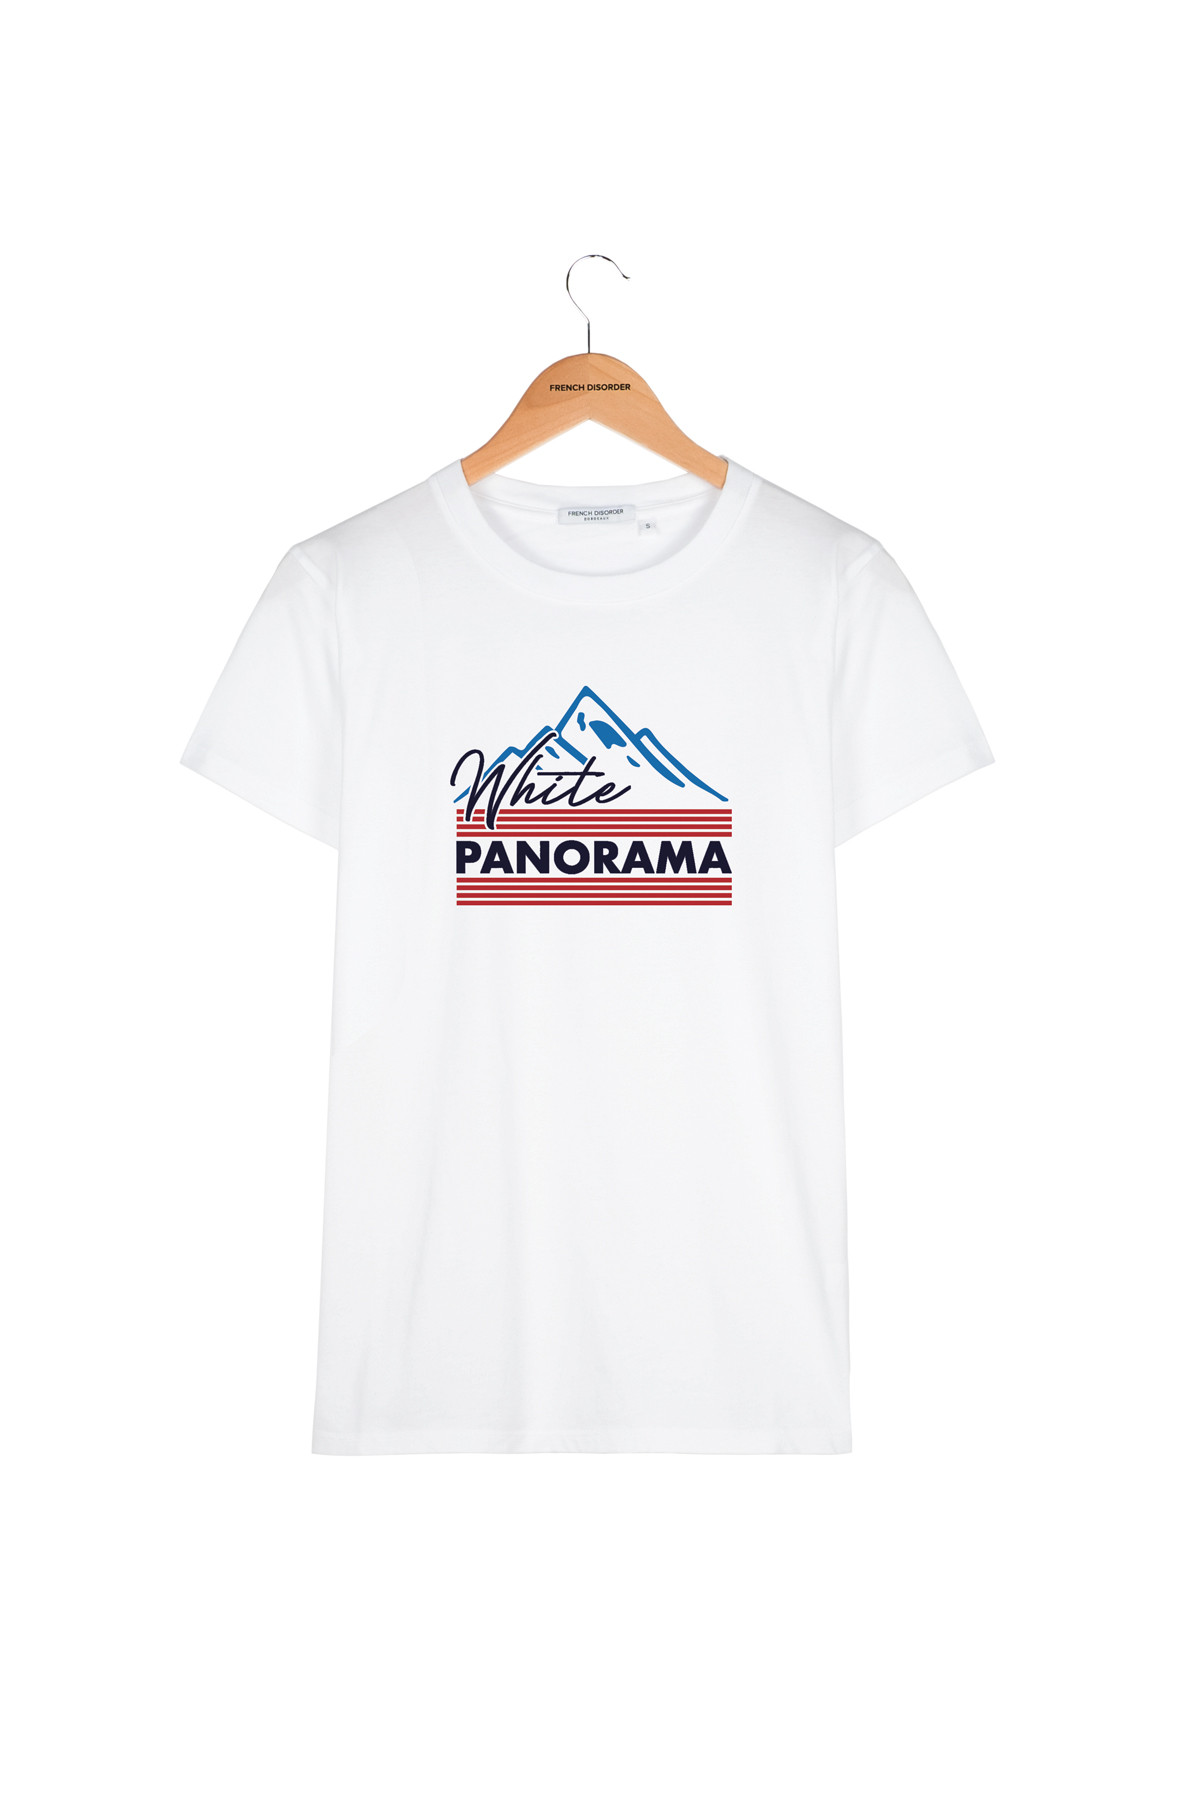 T-shirt WHITE PANORAMA French Disorder